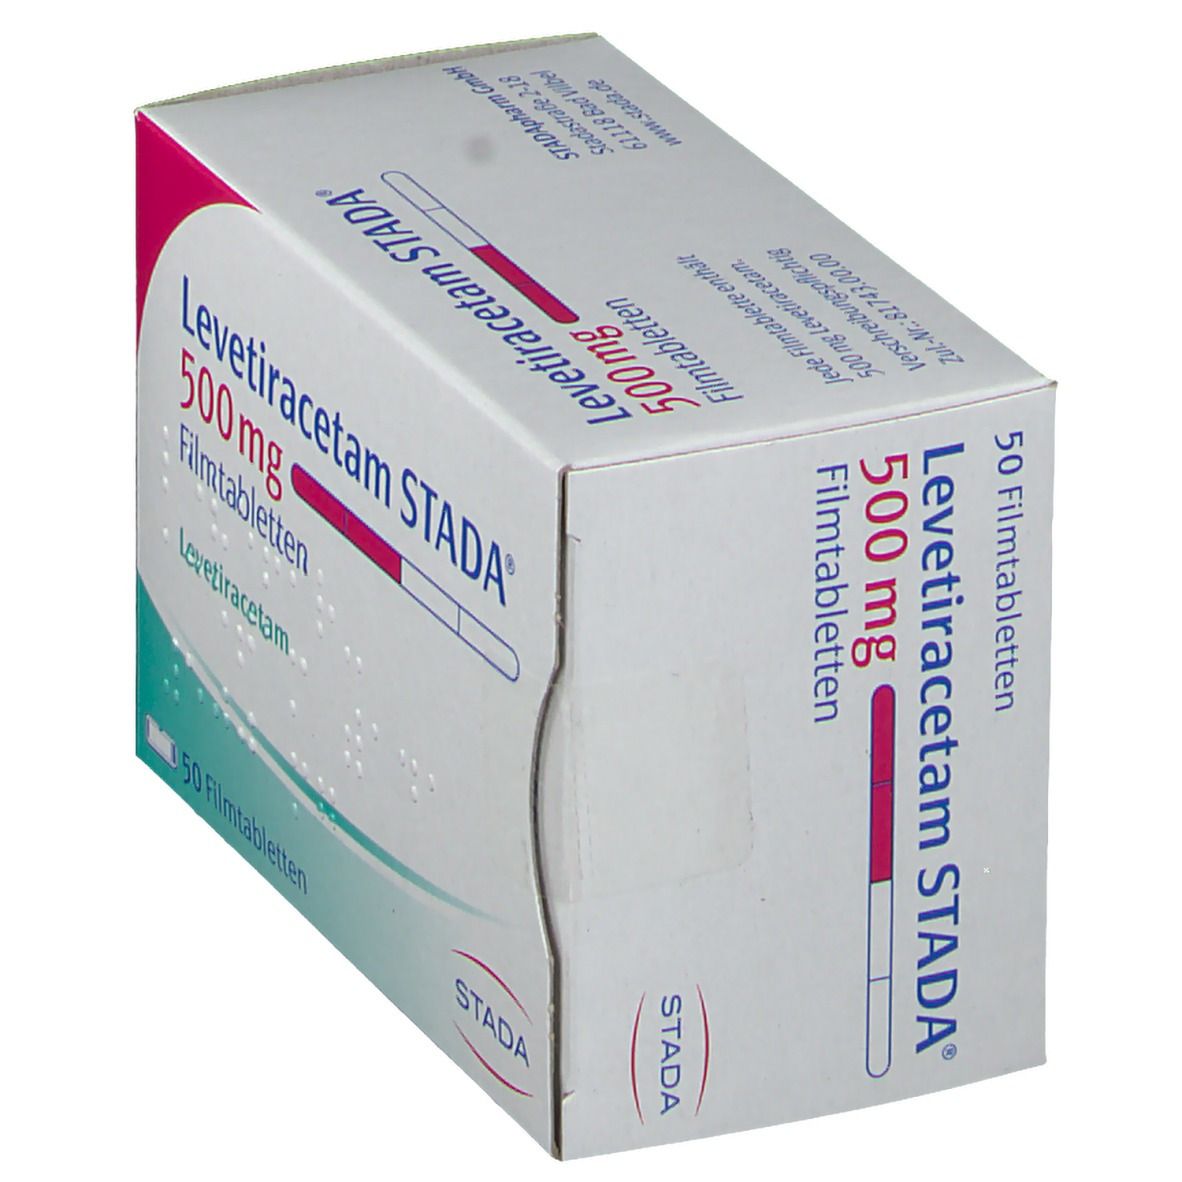 Levetiracetam STADA® 500 mg